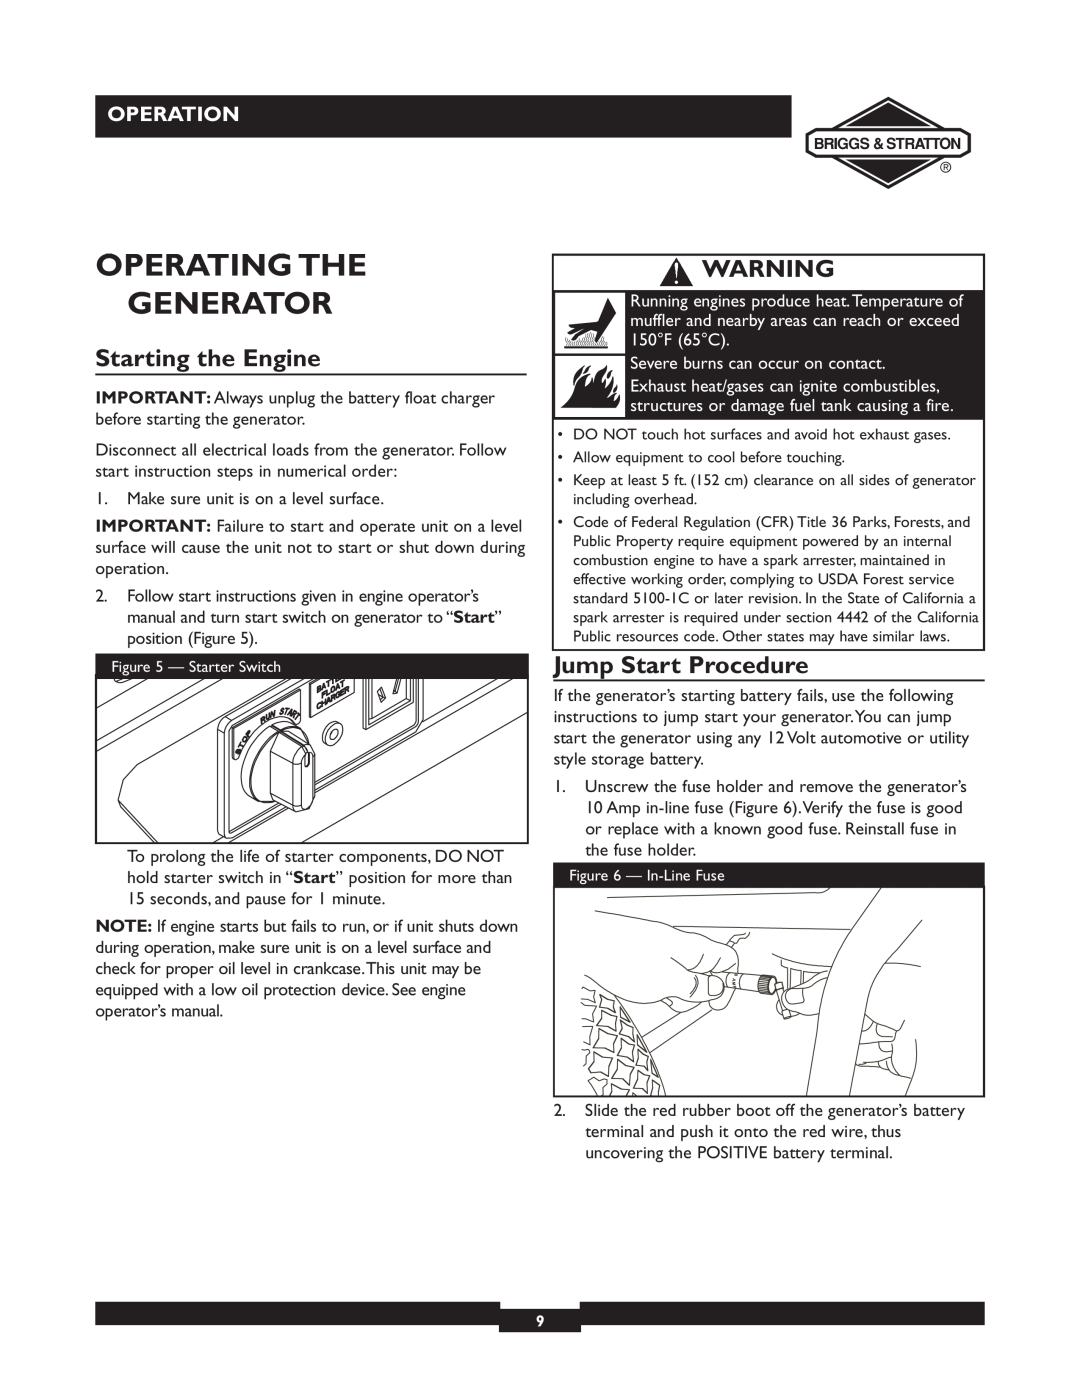 Briggs & Stratton 01894-1 manual Operating The Generator, Starting the Engine, Jump Start Procedure, Operation 